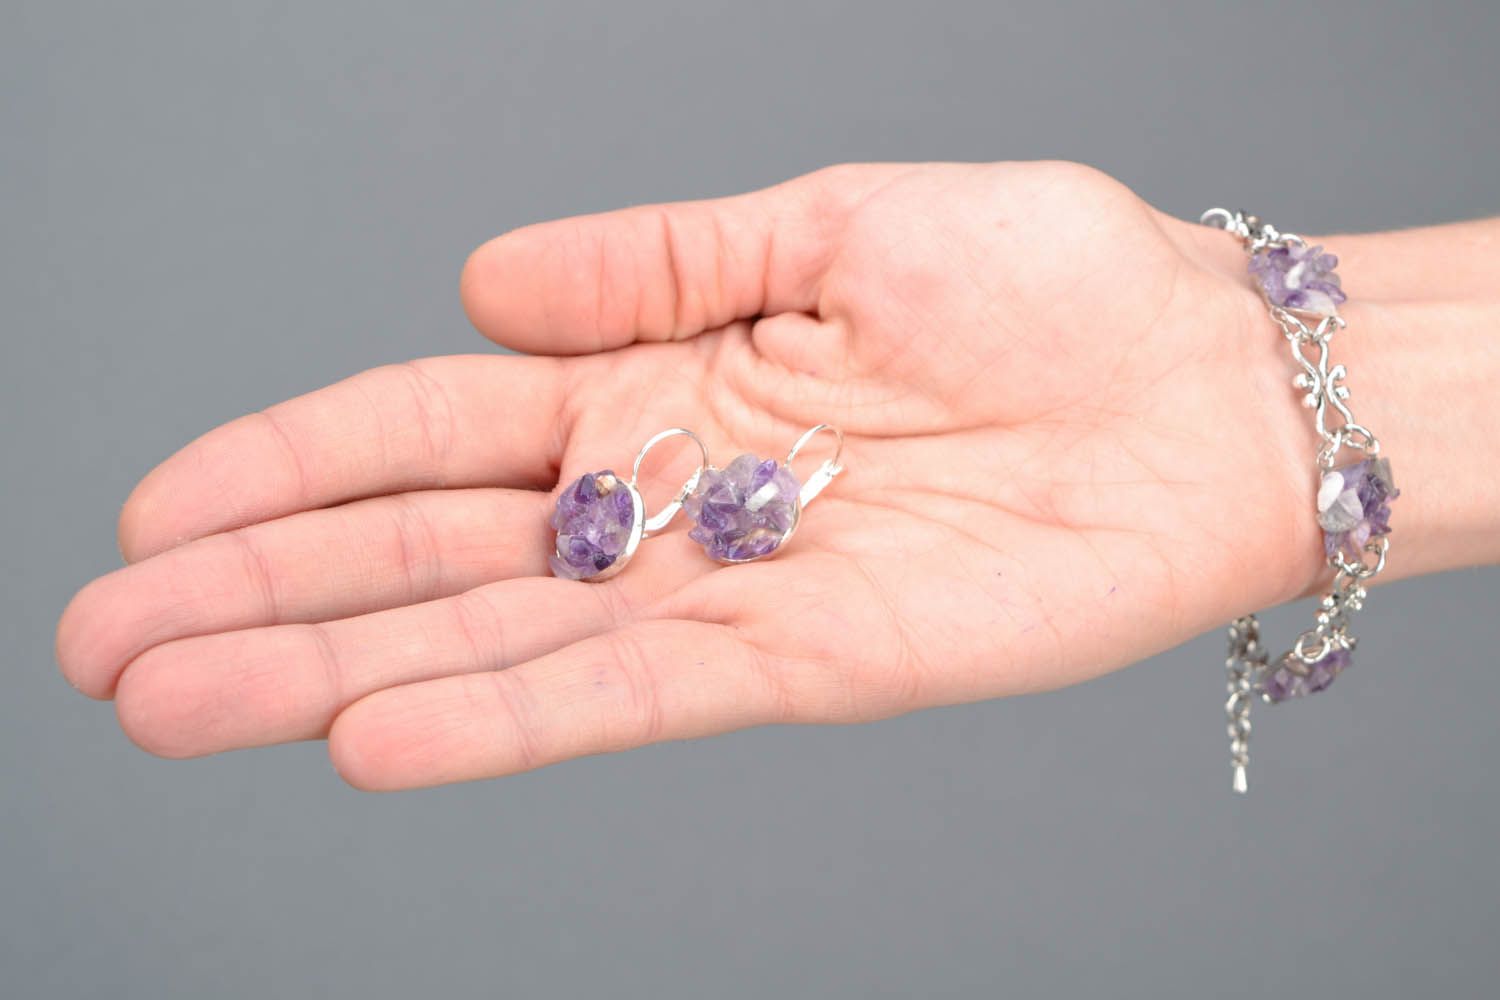 Amethyst earrings and bracelet photo 2